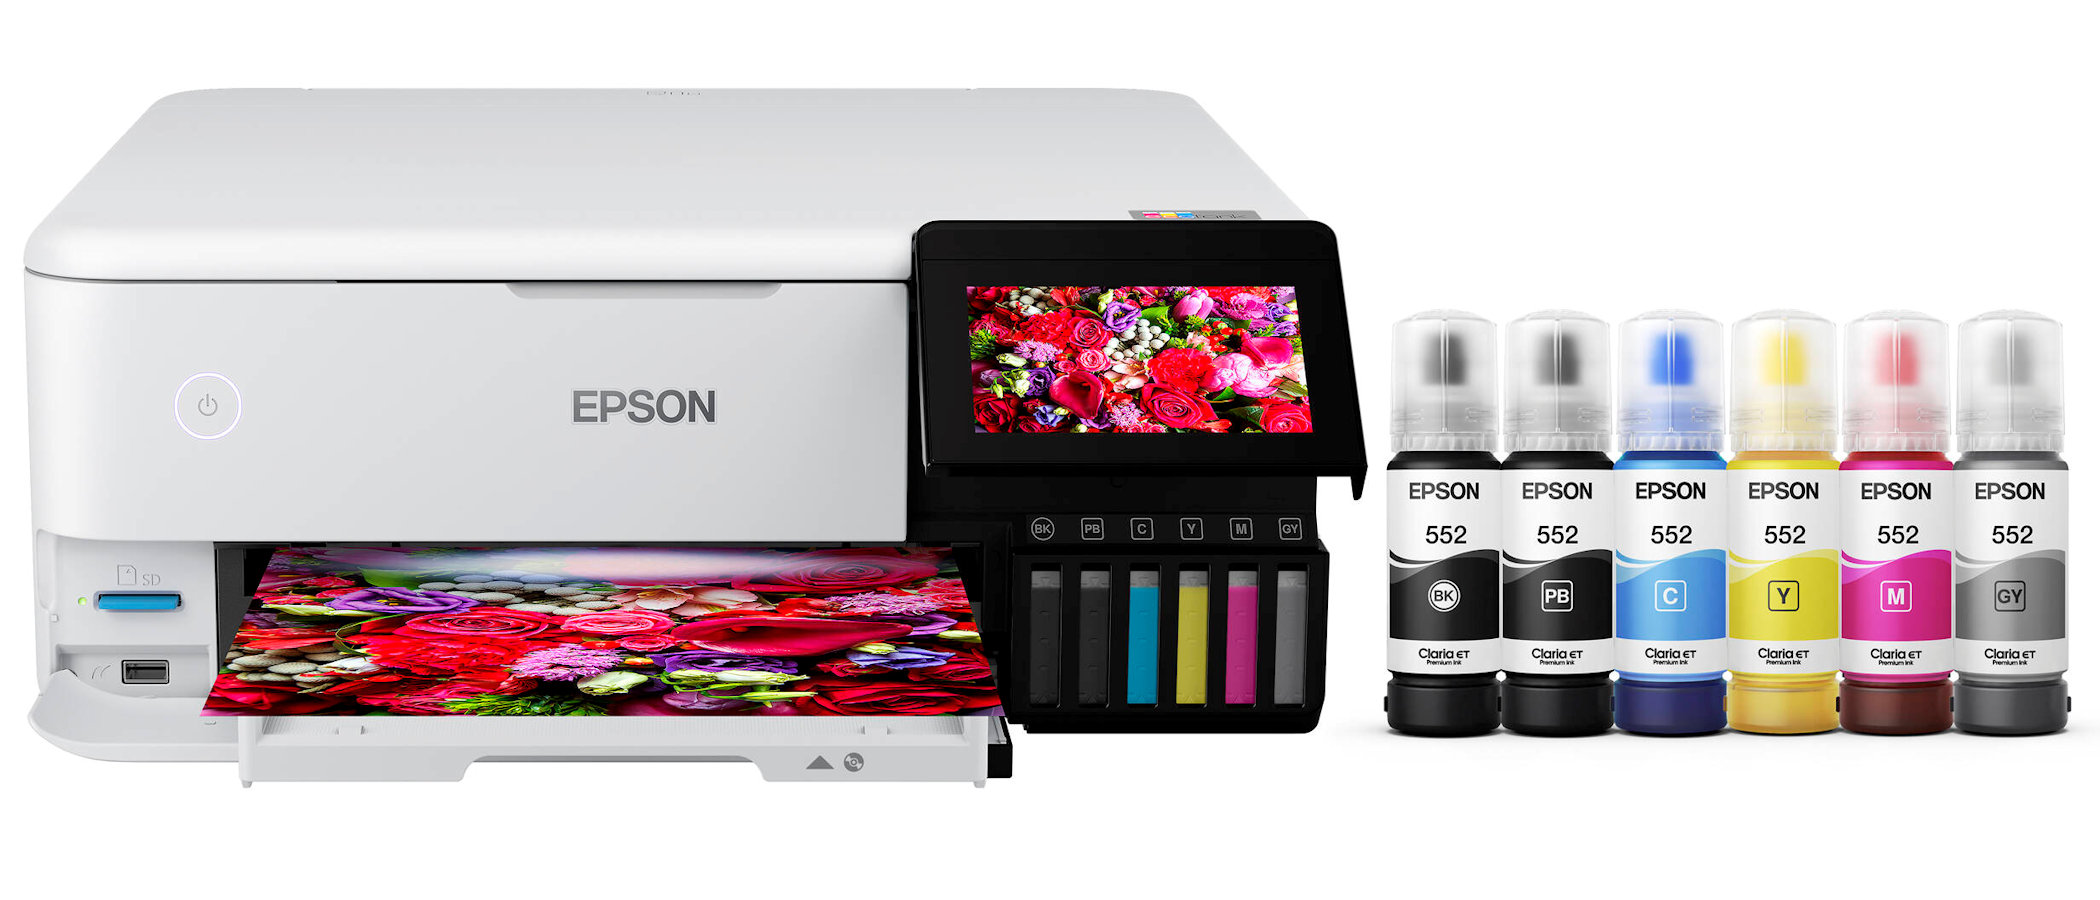 Epson ET-8550 - Black and white panoramic fine art photo print, using 13  rag matte roll paper 